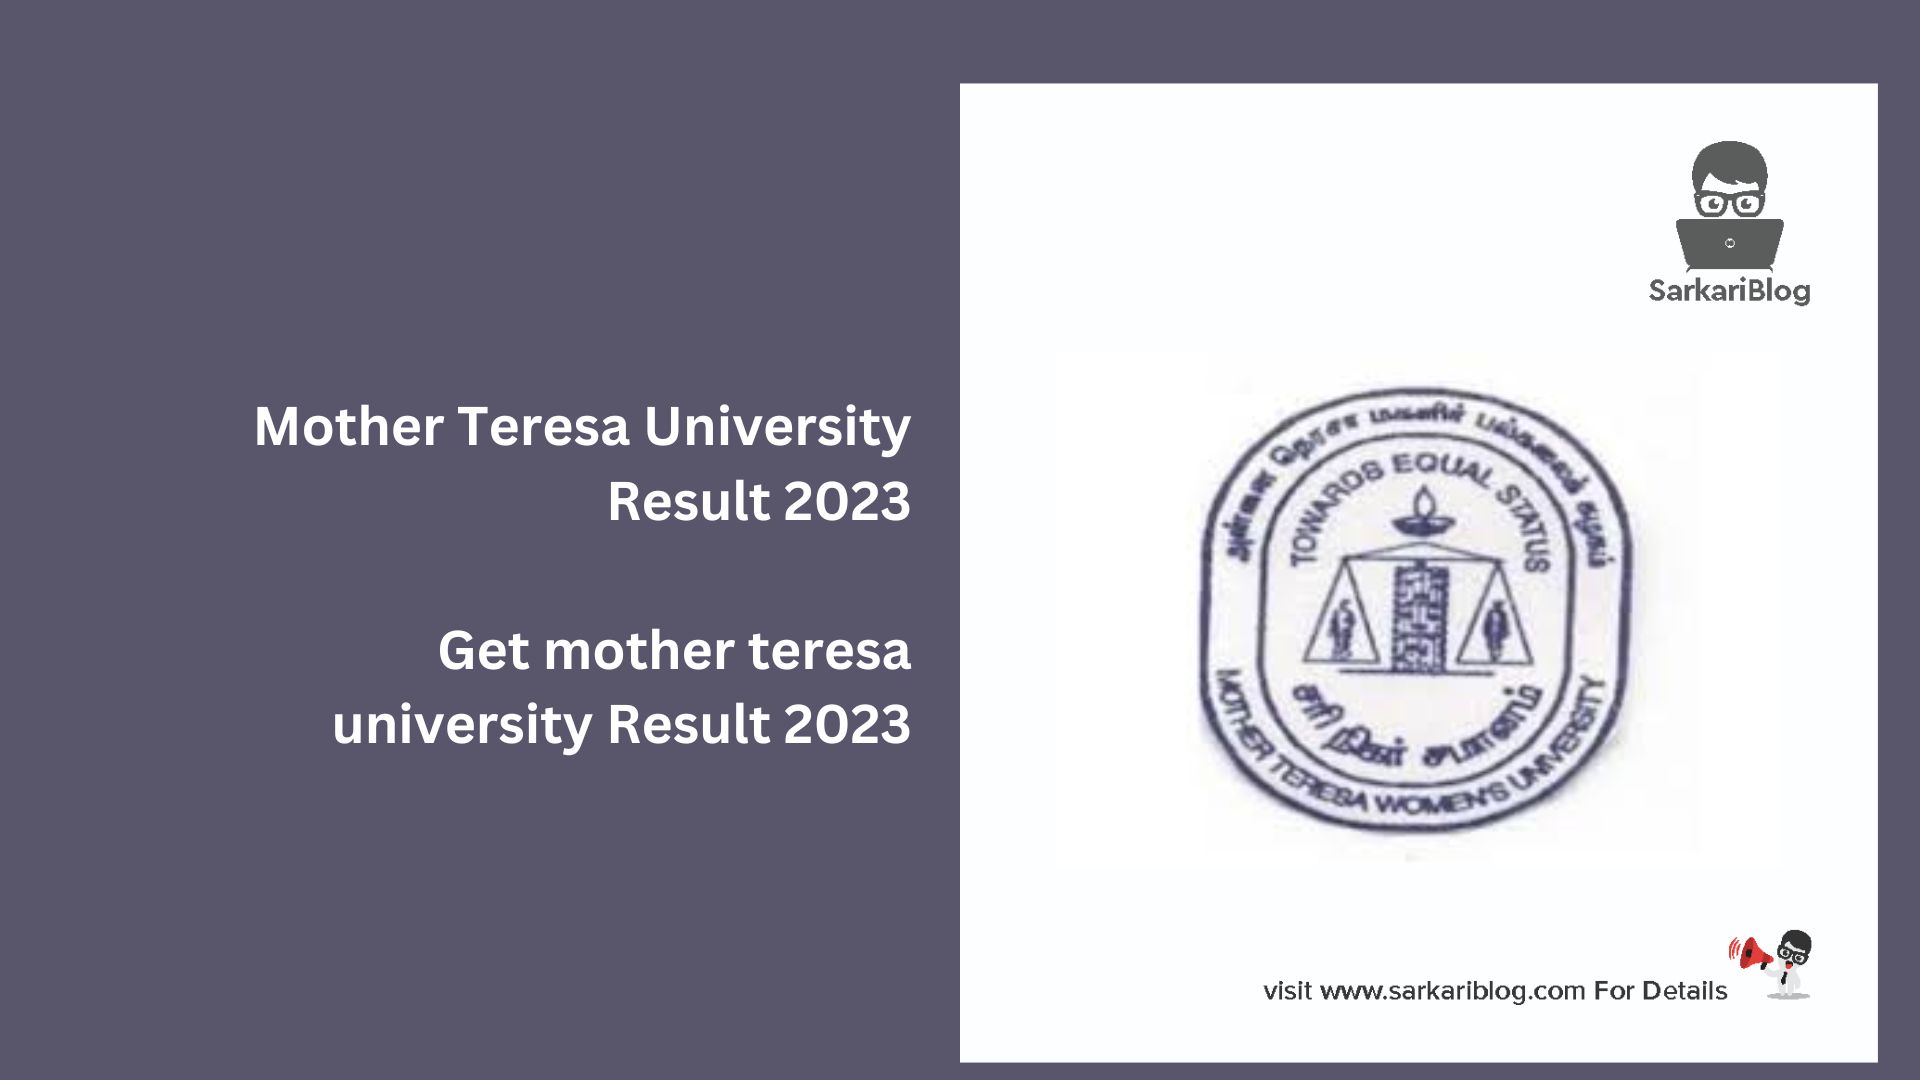 Mother Teresa University Result 2023